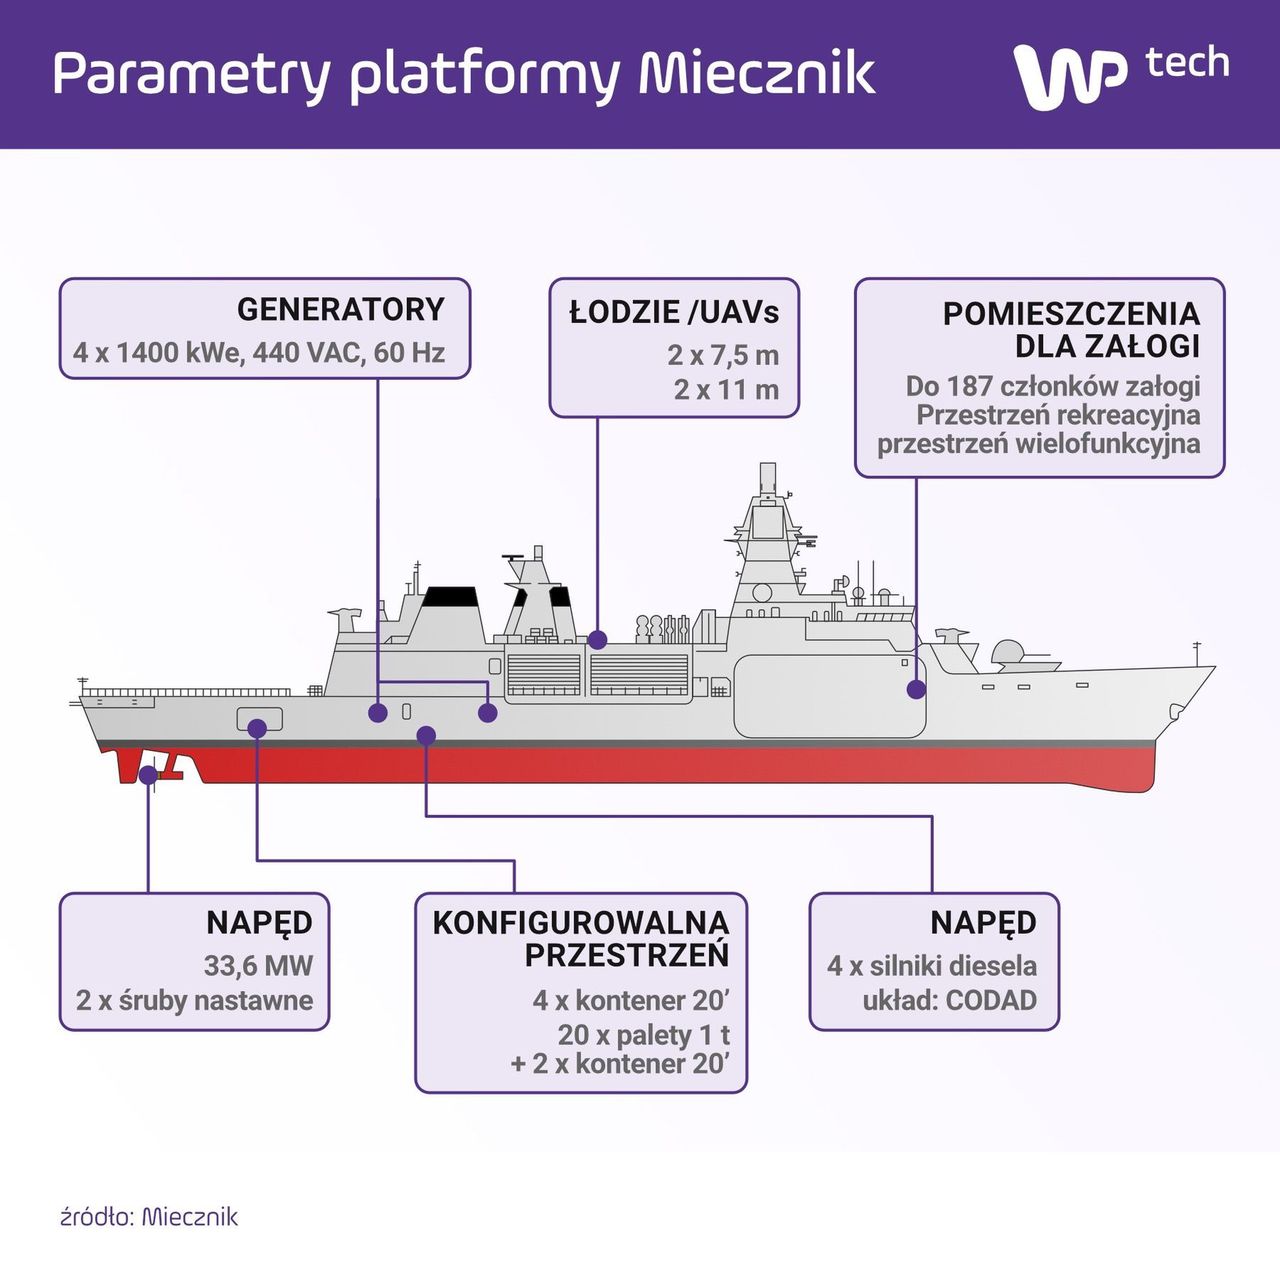 Parametry platformy Miecznik